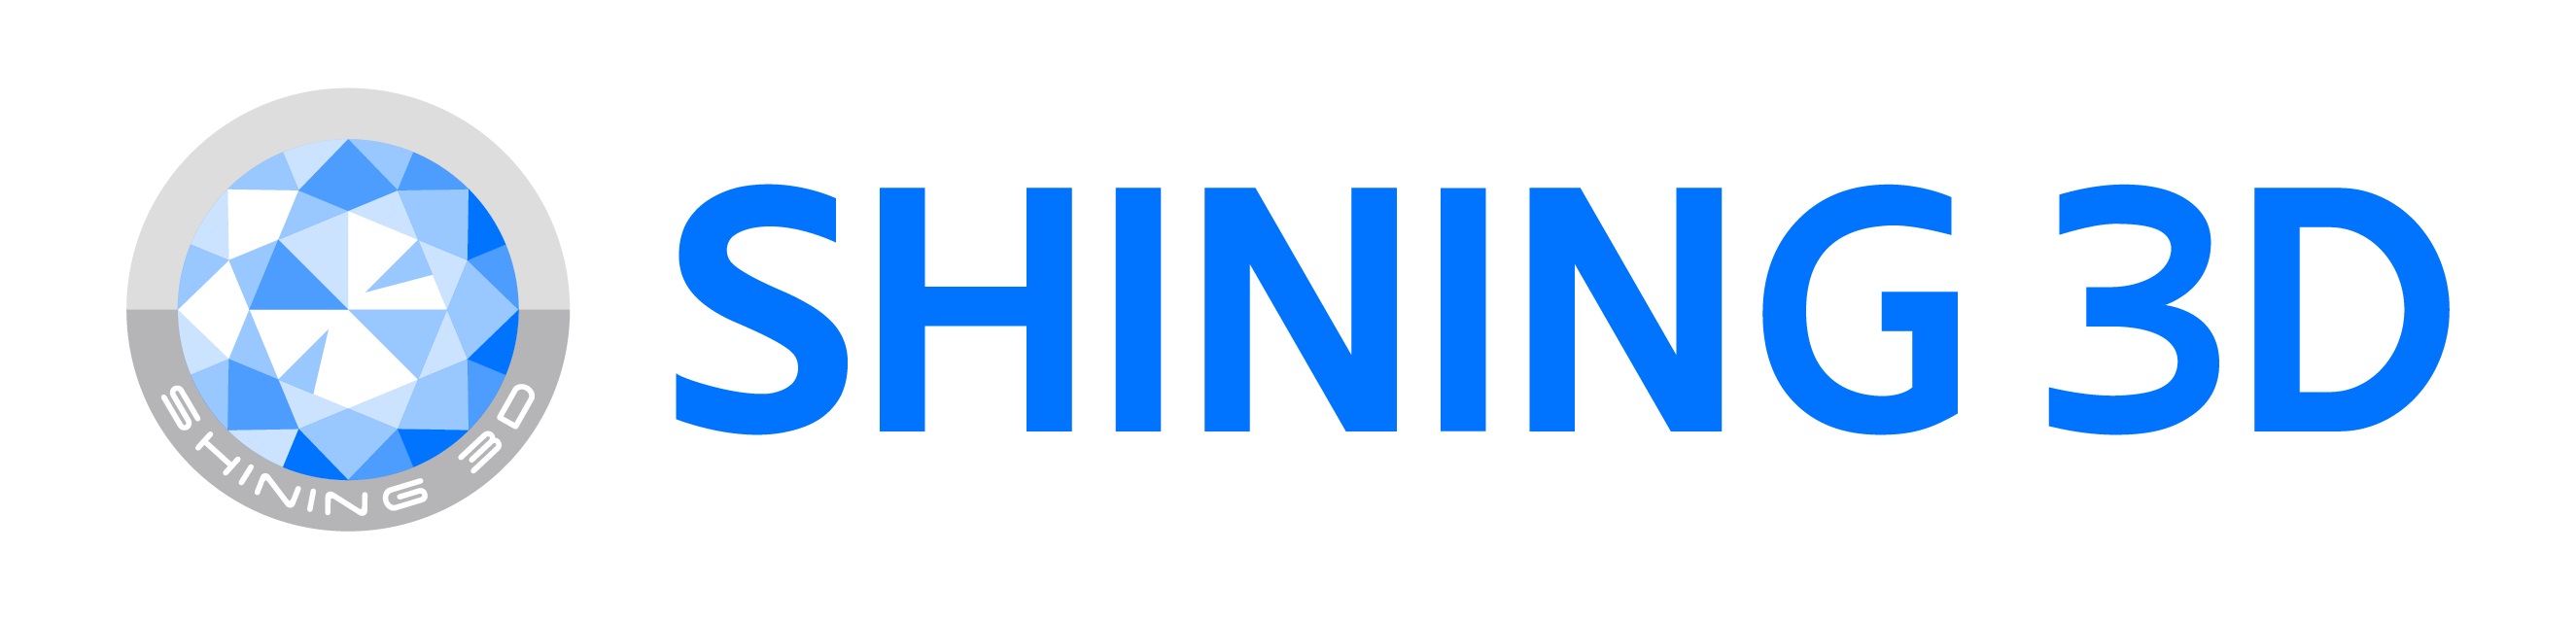 Shining3D Technology GmbH